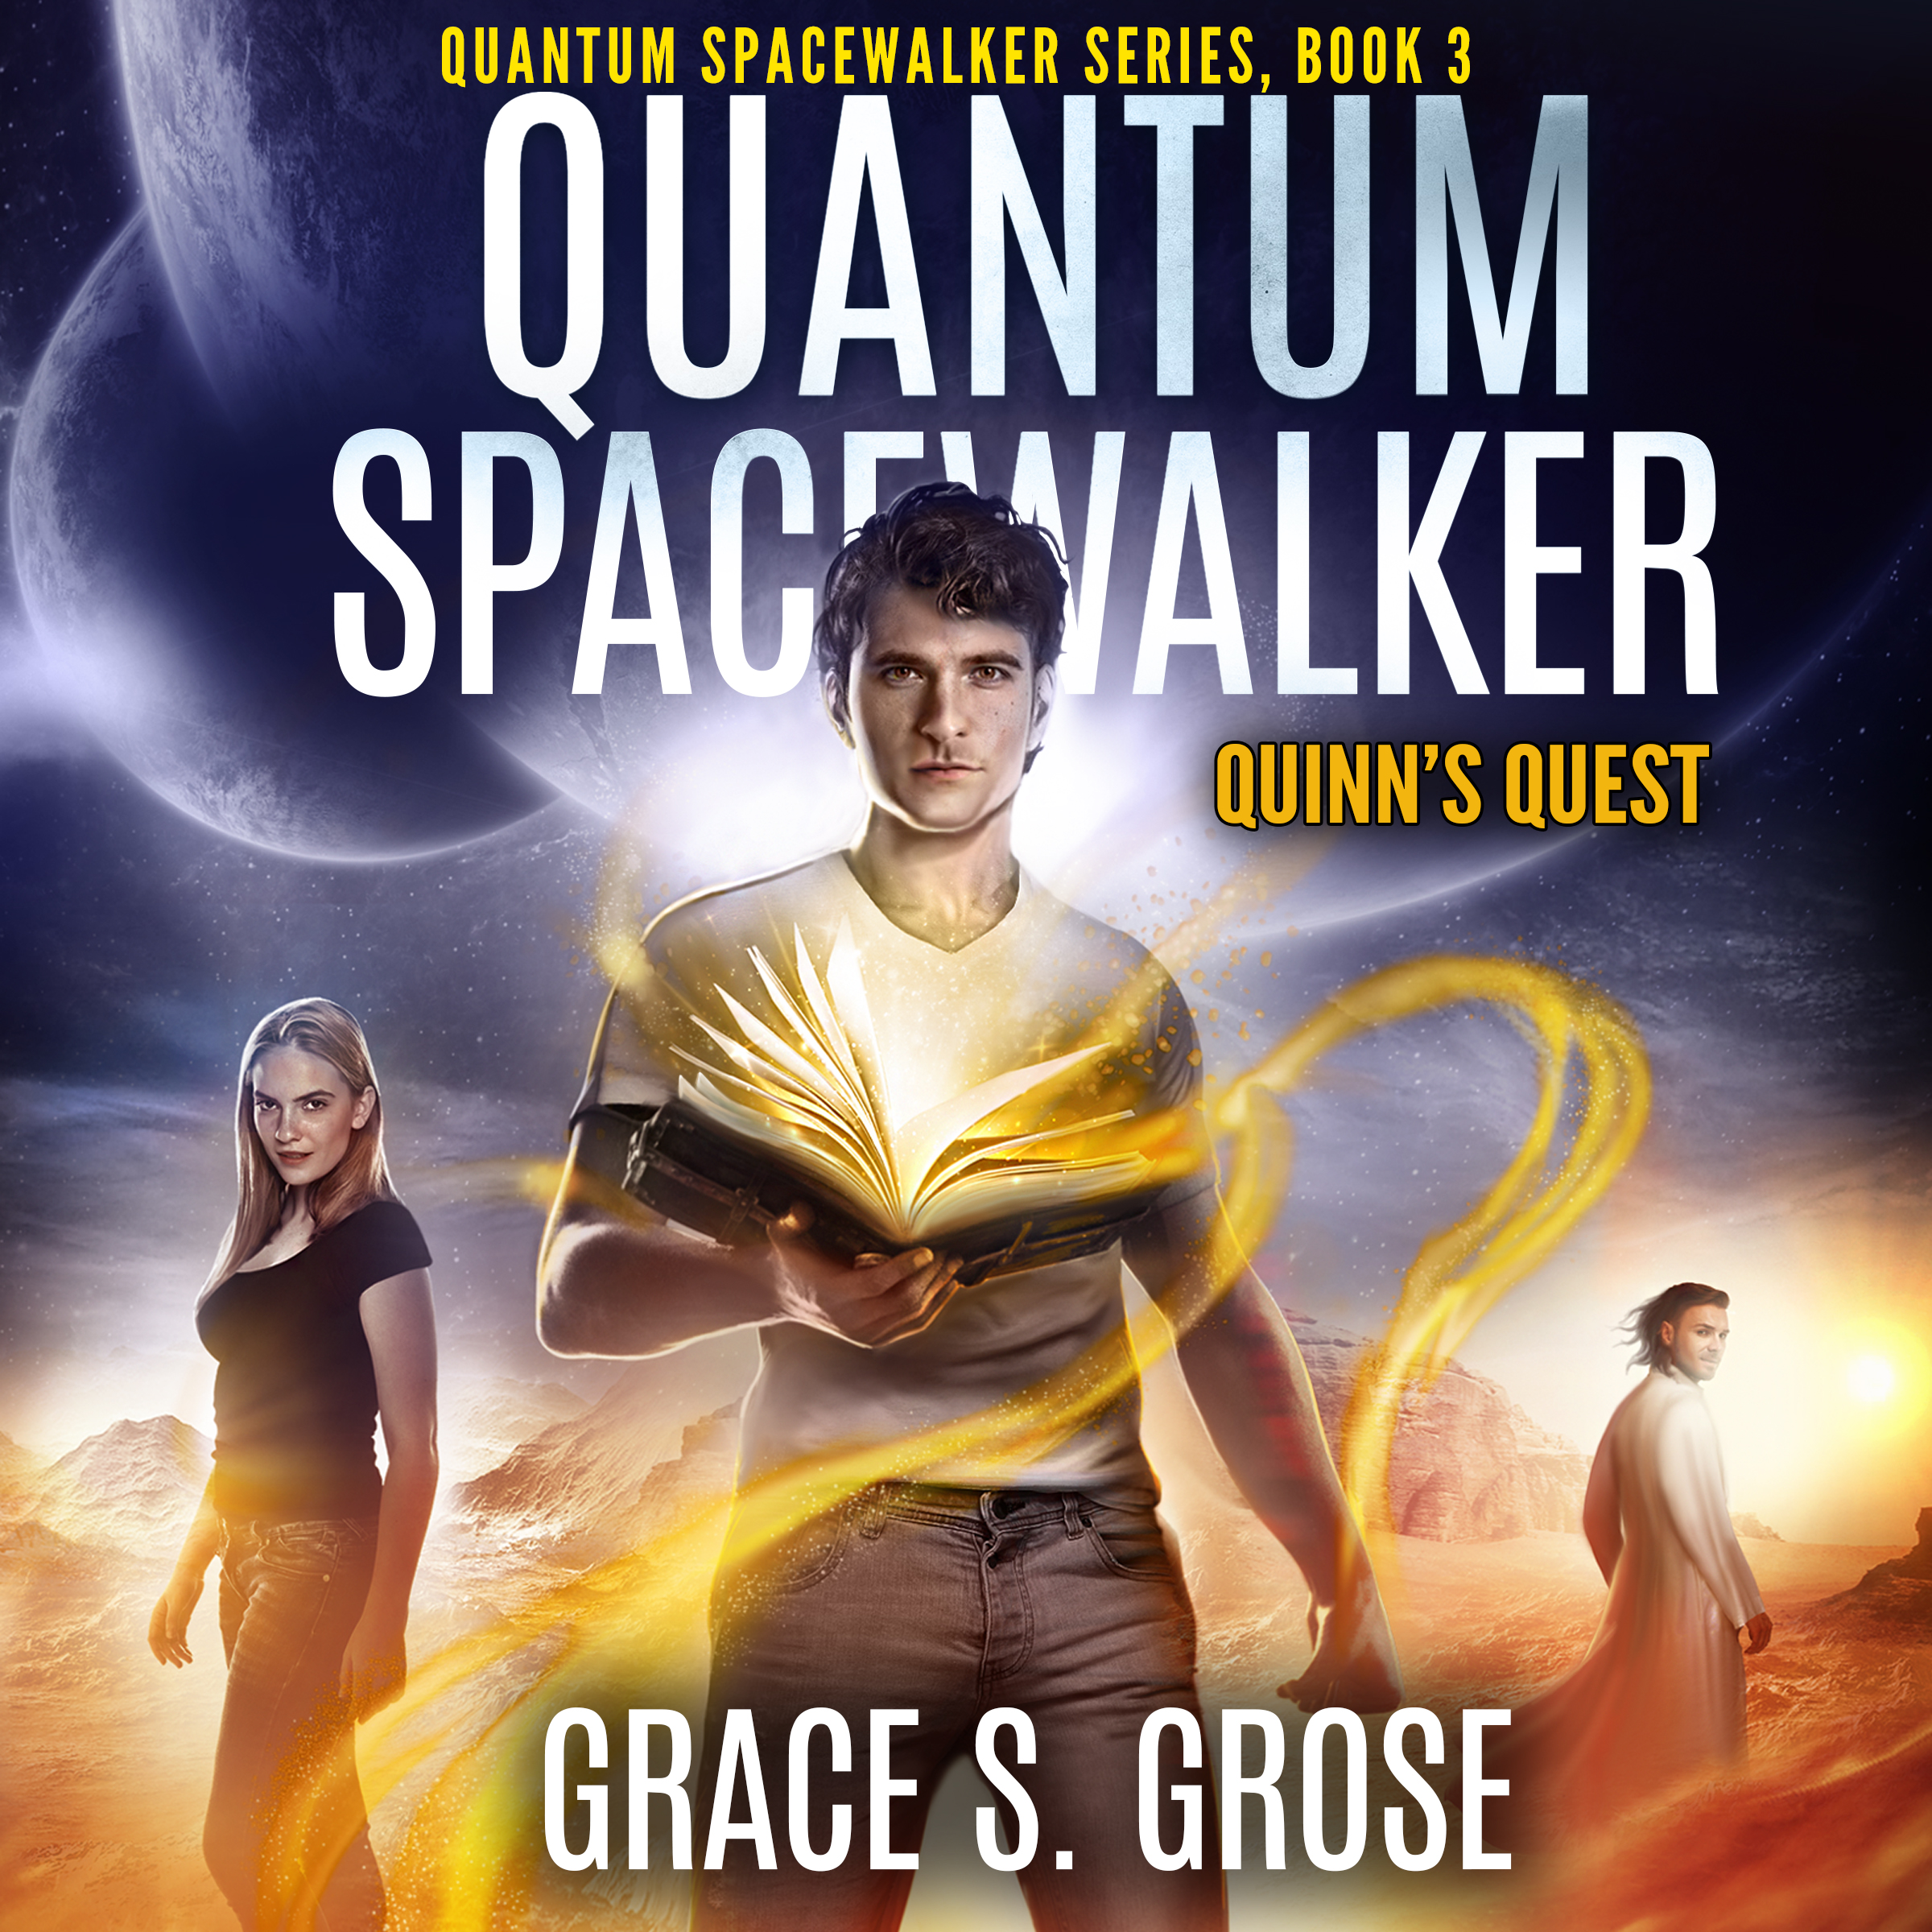 Quantum Spacewalker: Quinn’s Quest Almost Here!